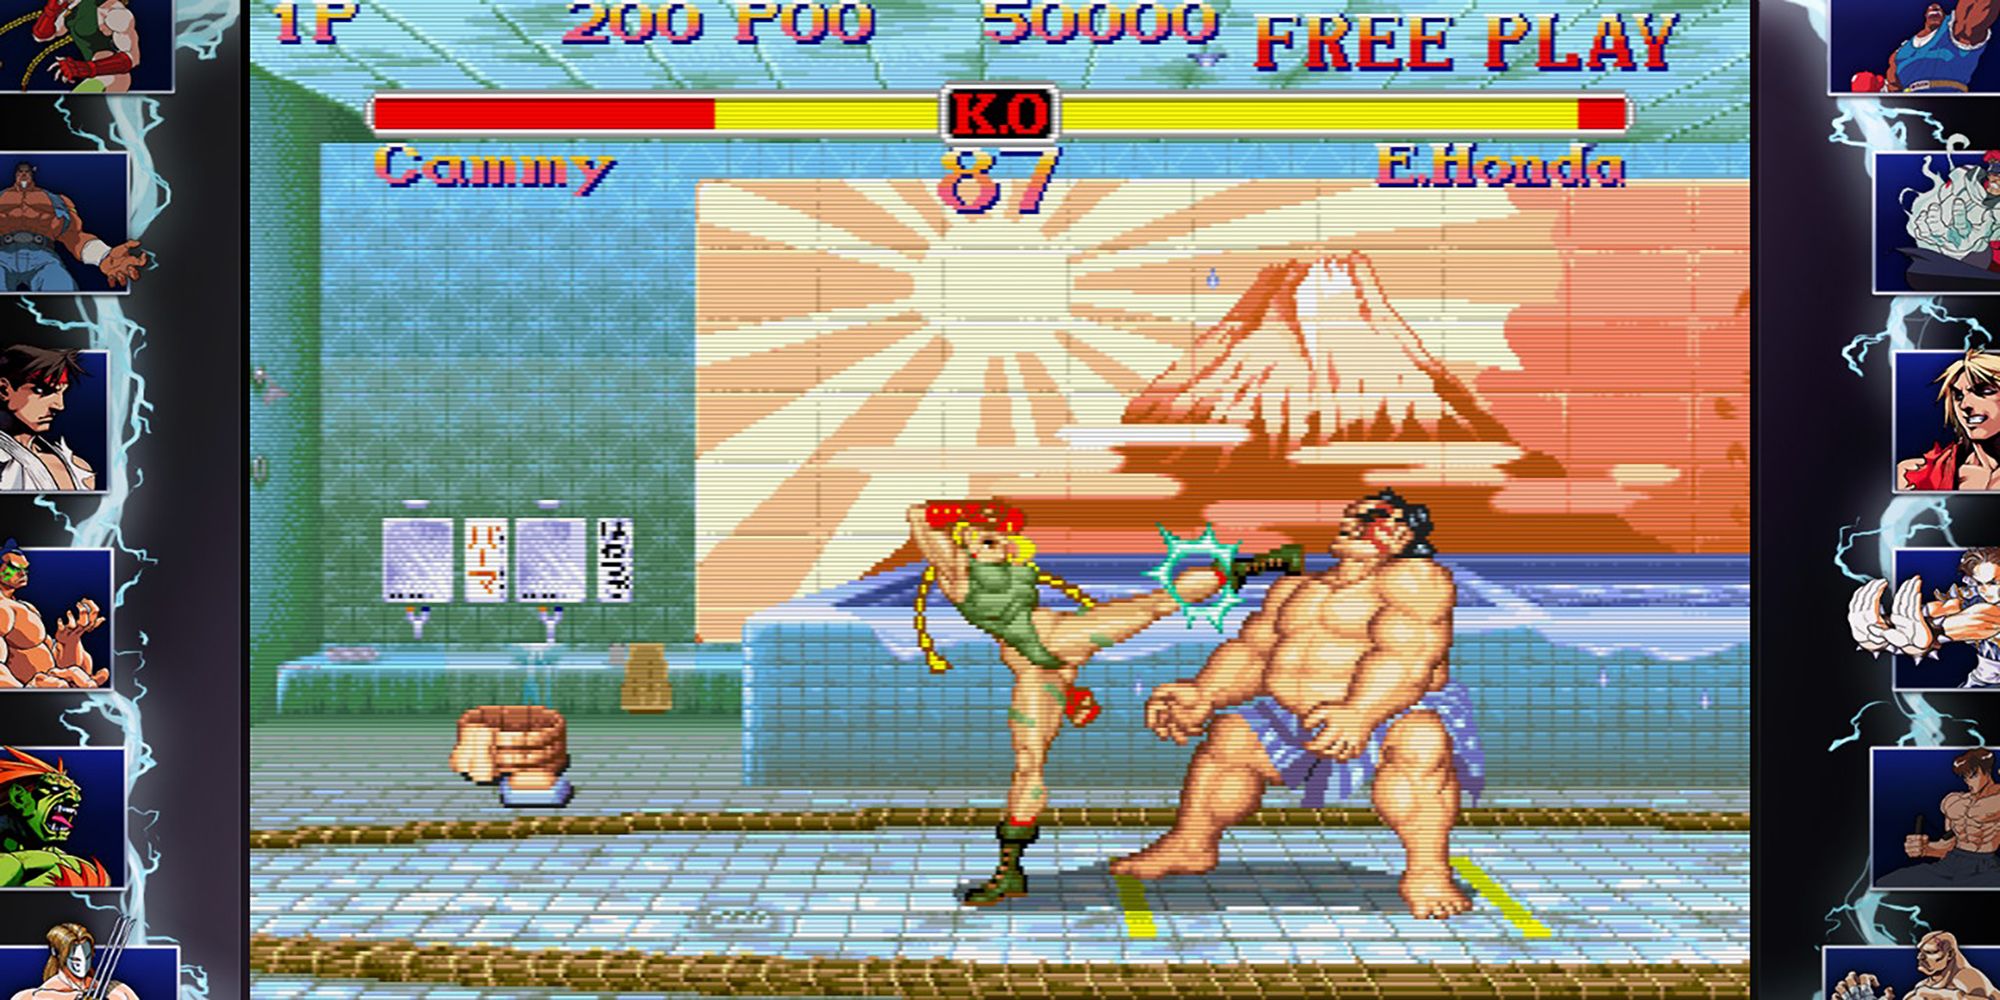 Cammy kicks E Honda inside a bathhouse in Super Street Fighter 2.